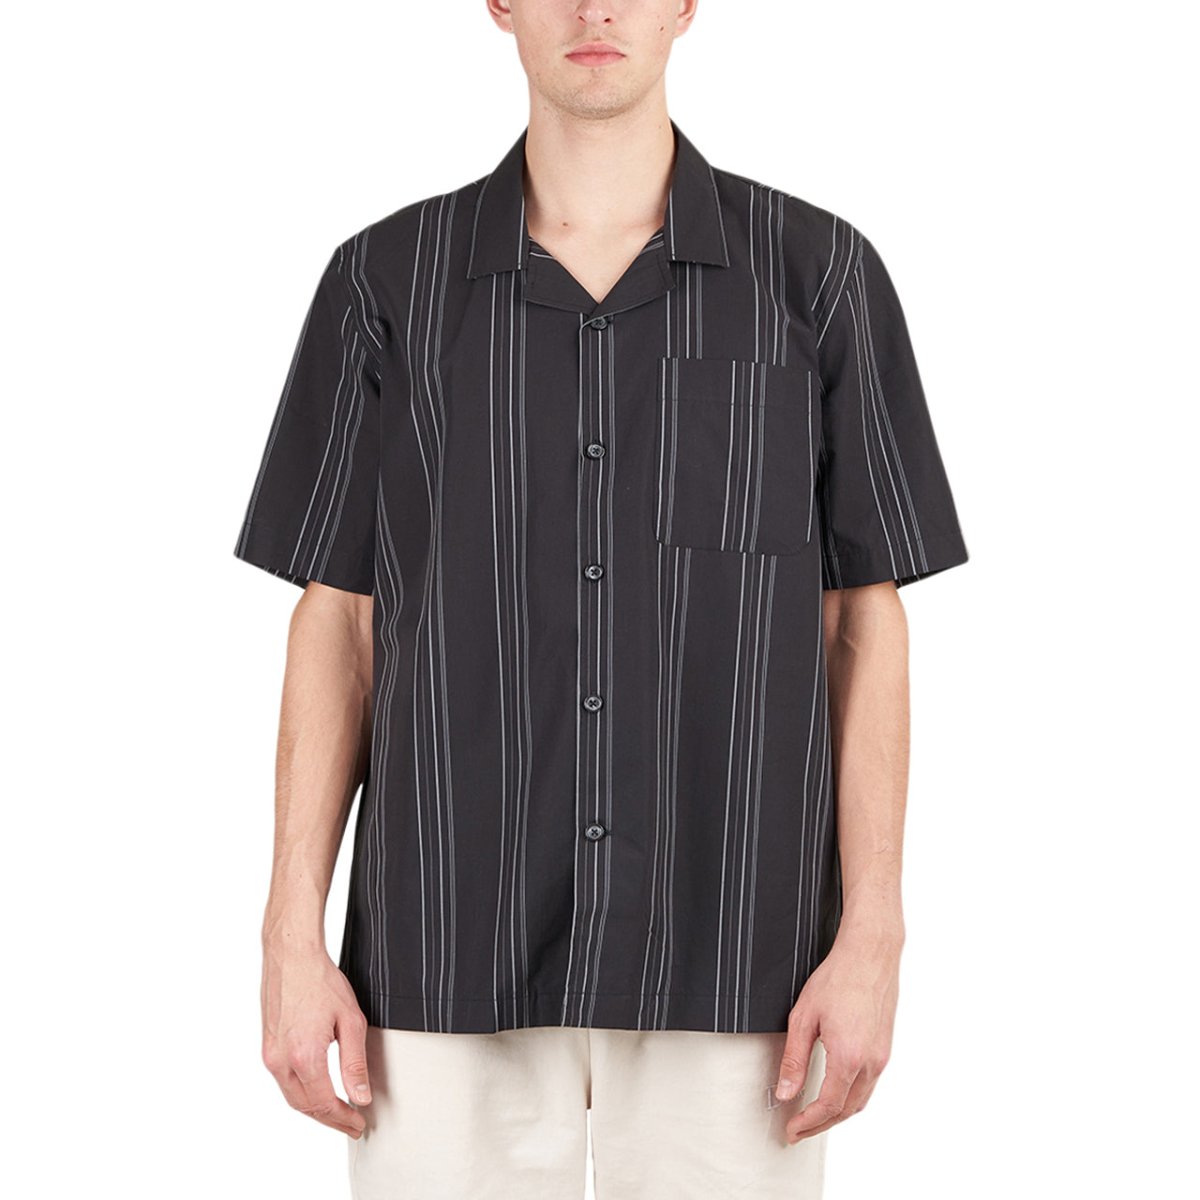 Image of Han Kjobenhavn Summer Shirt (Black)